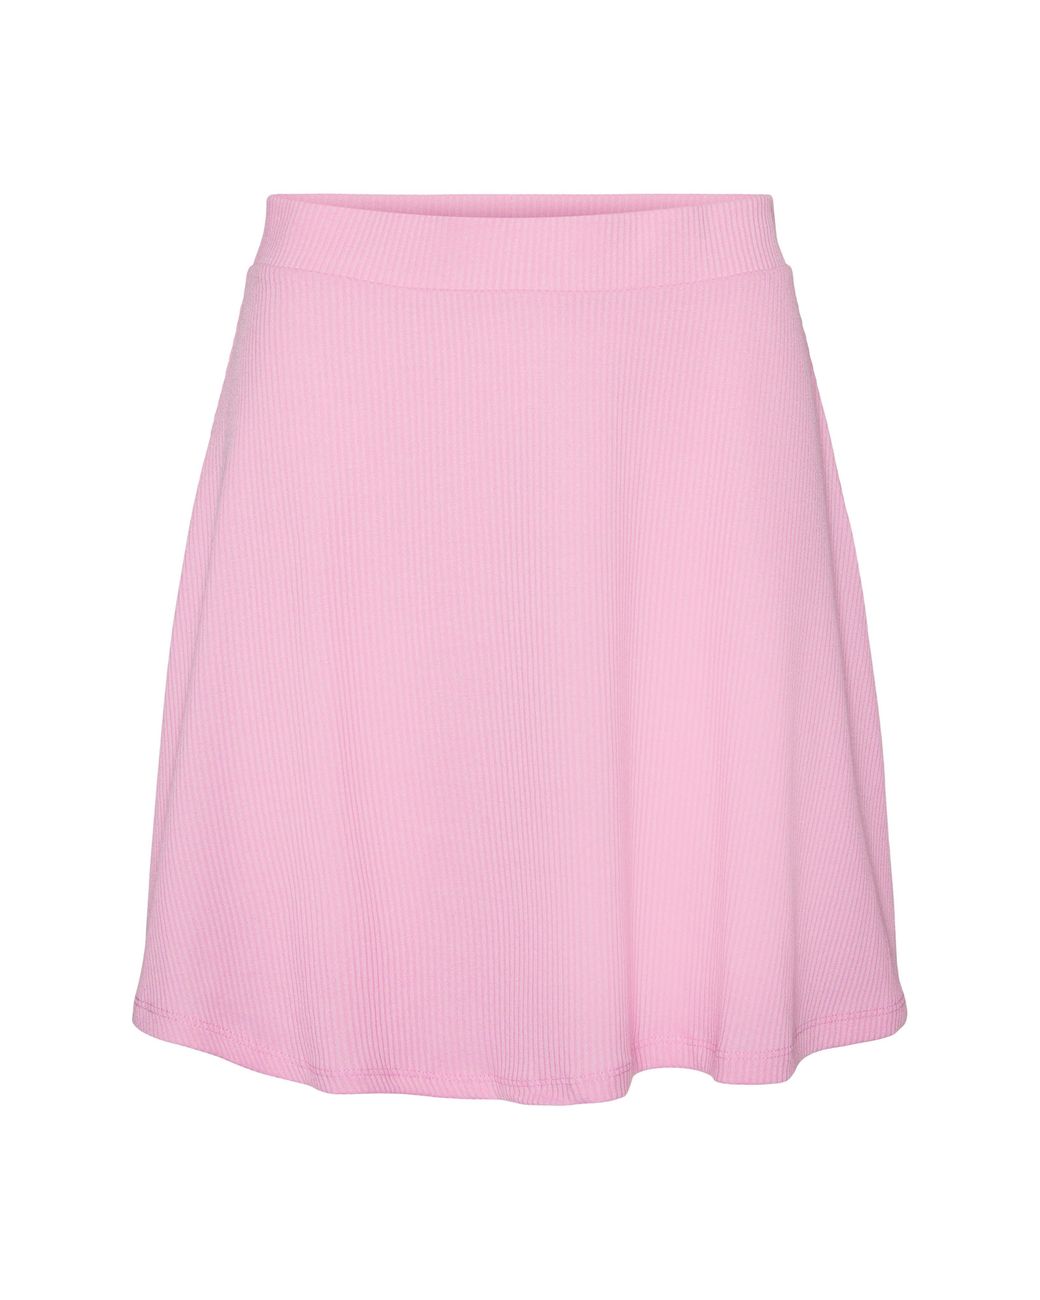 Vero Moda Tica High Waist Skater Skirt in Pink | Lyst